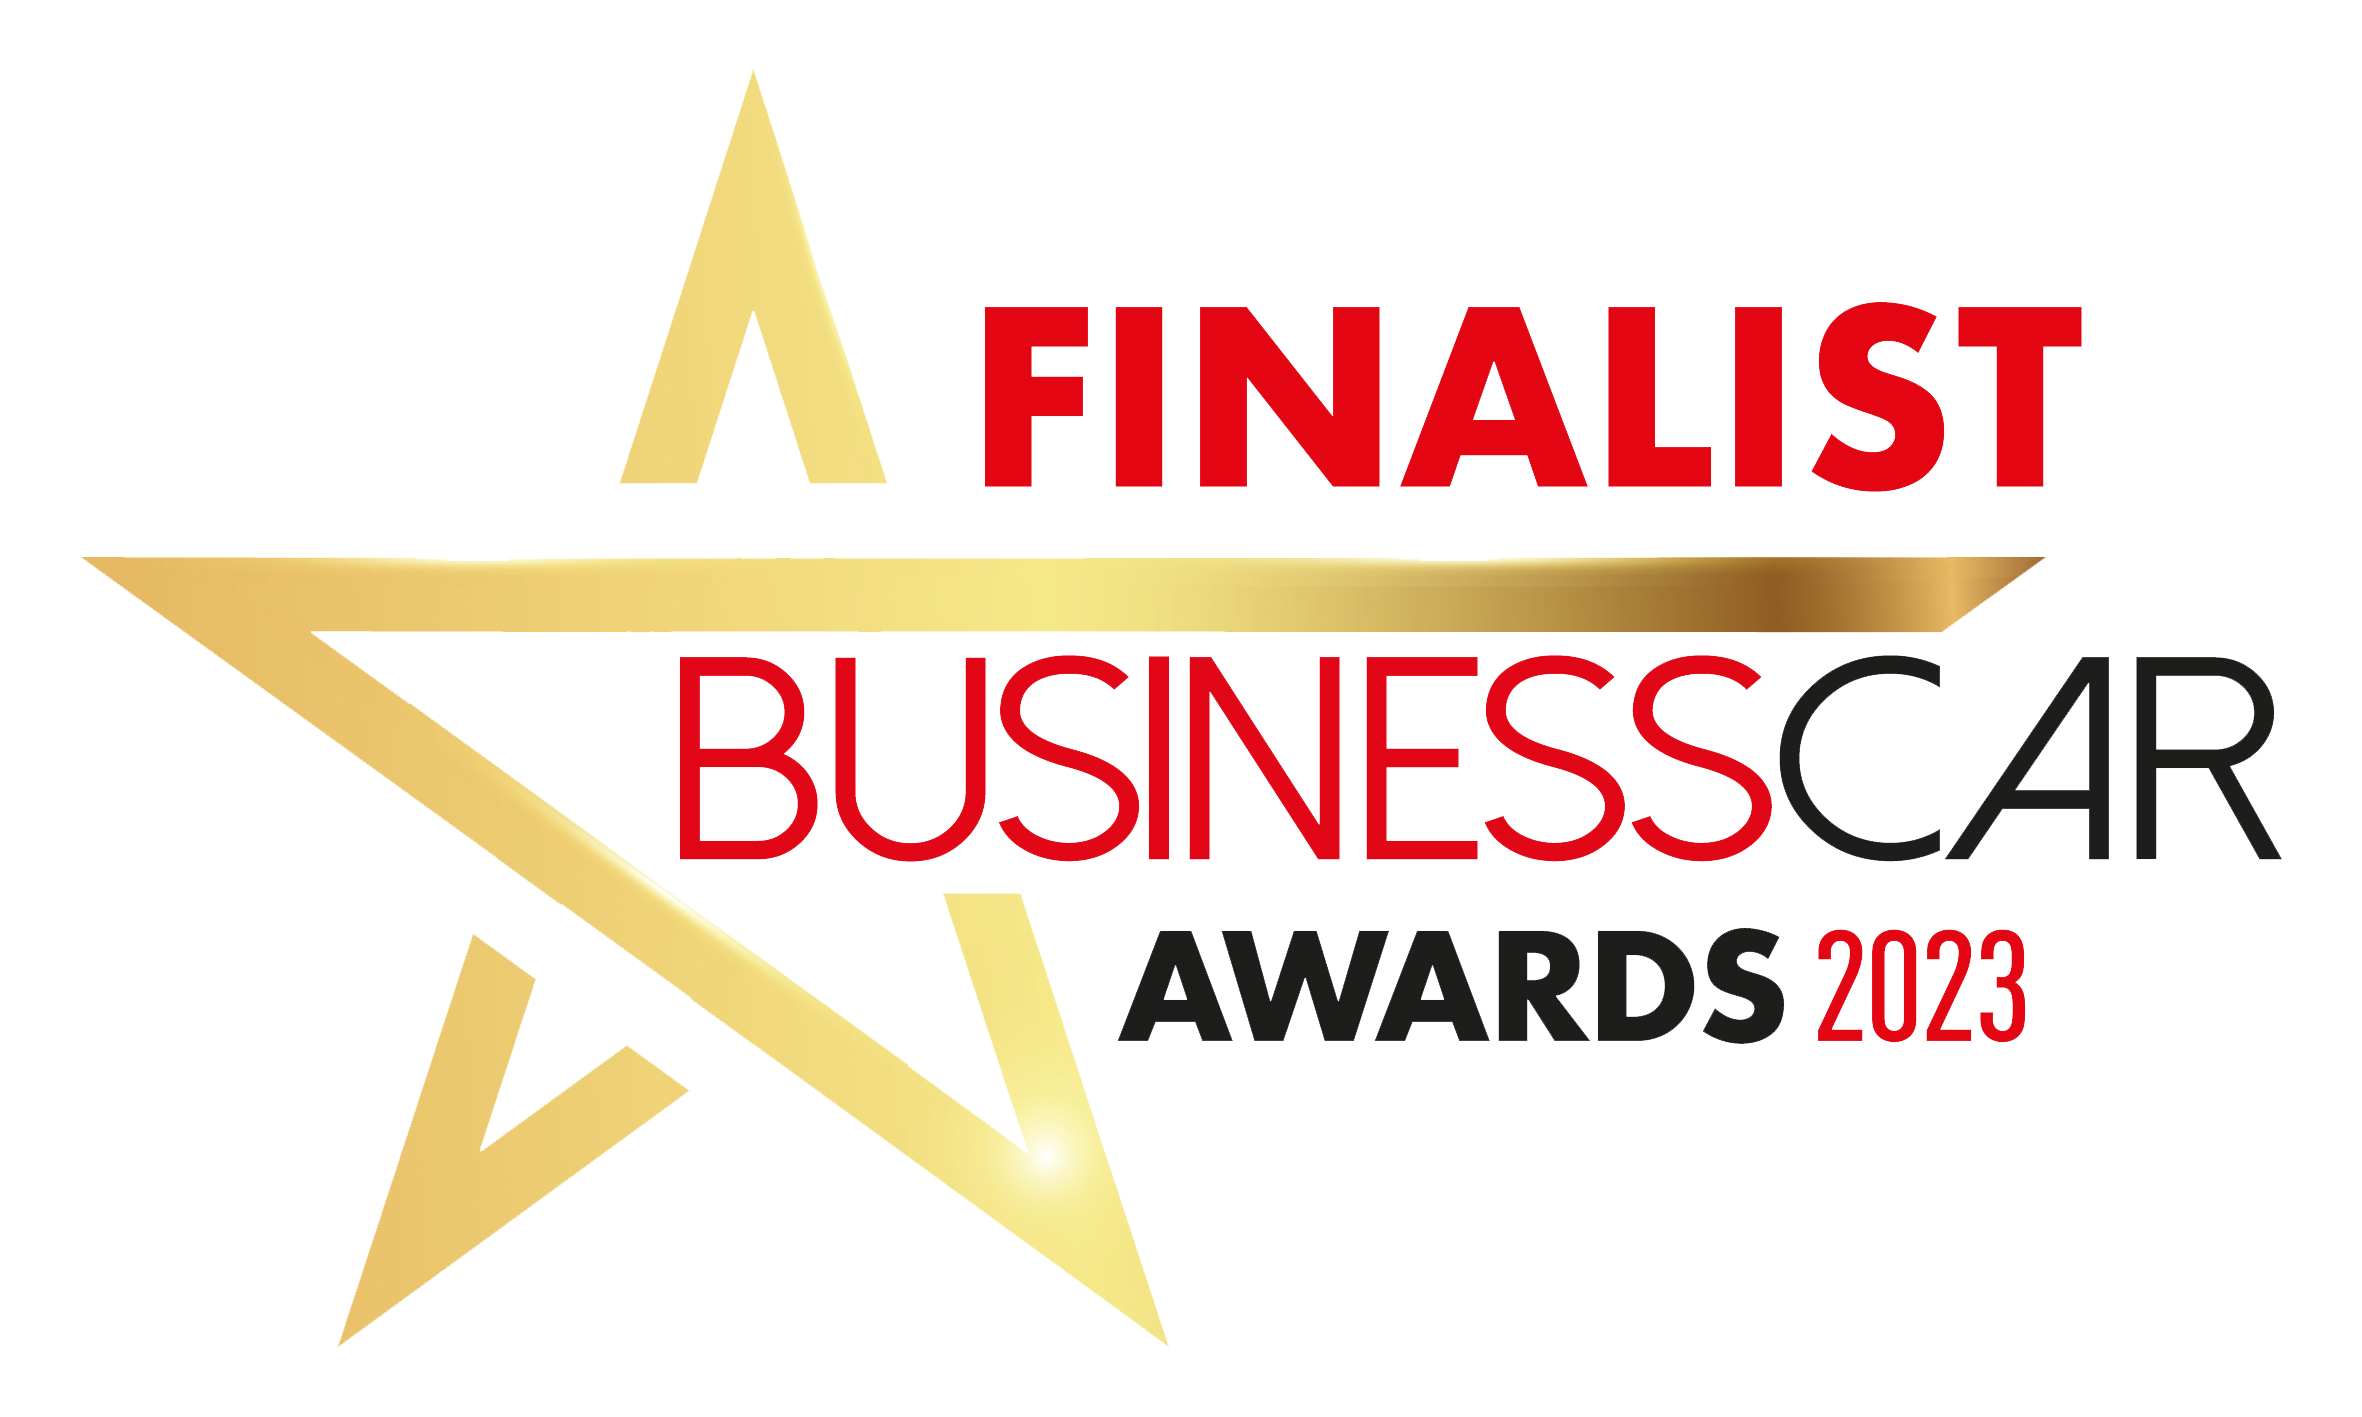 Business Car Awards 2023 Finalist Logo